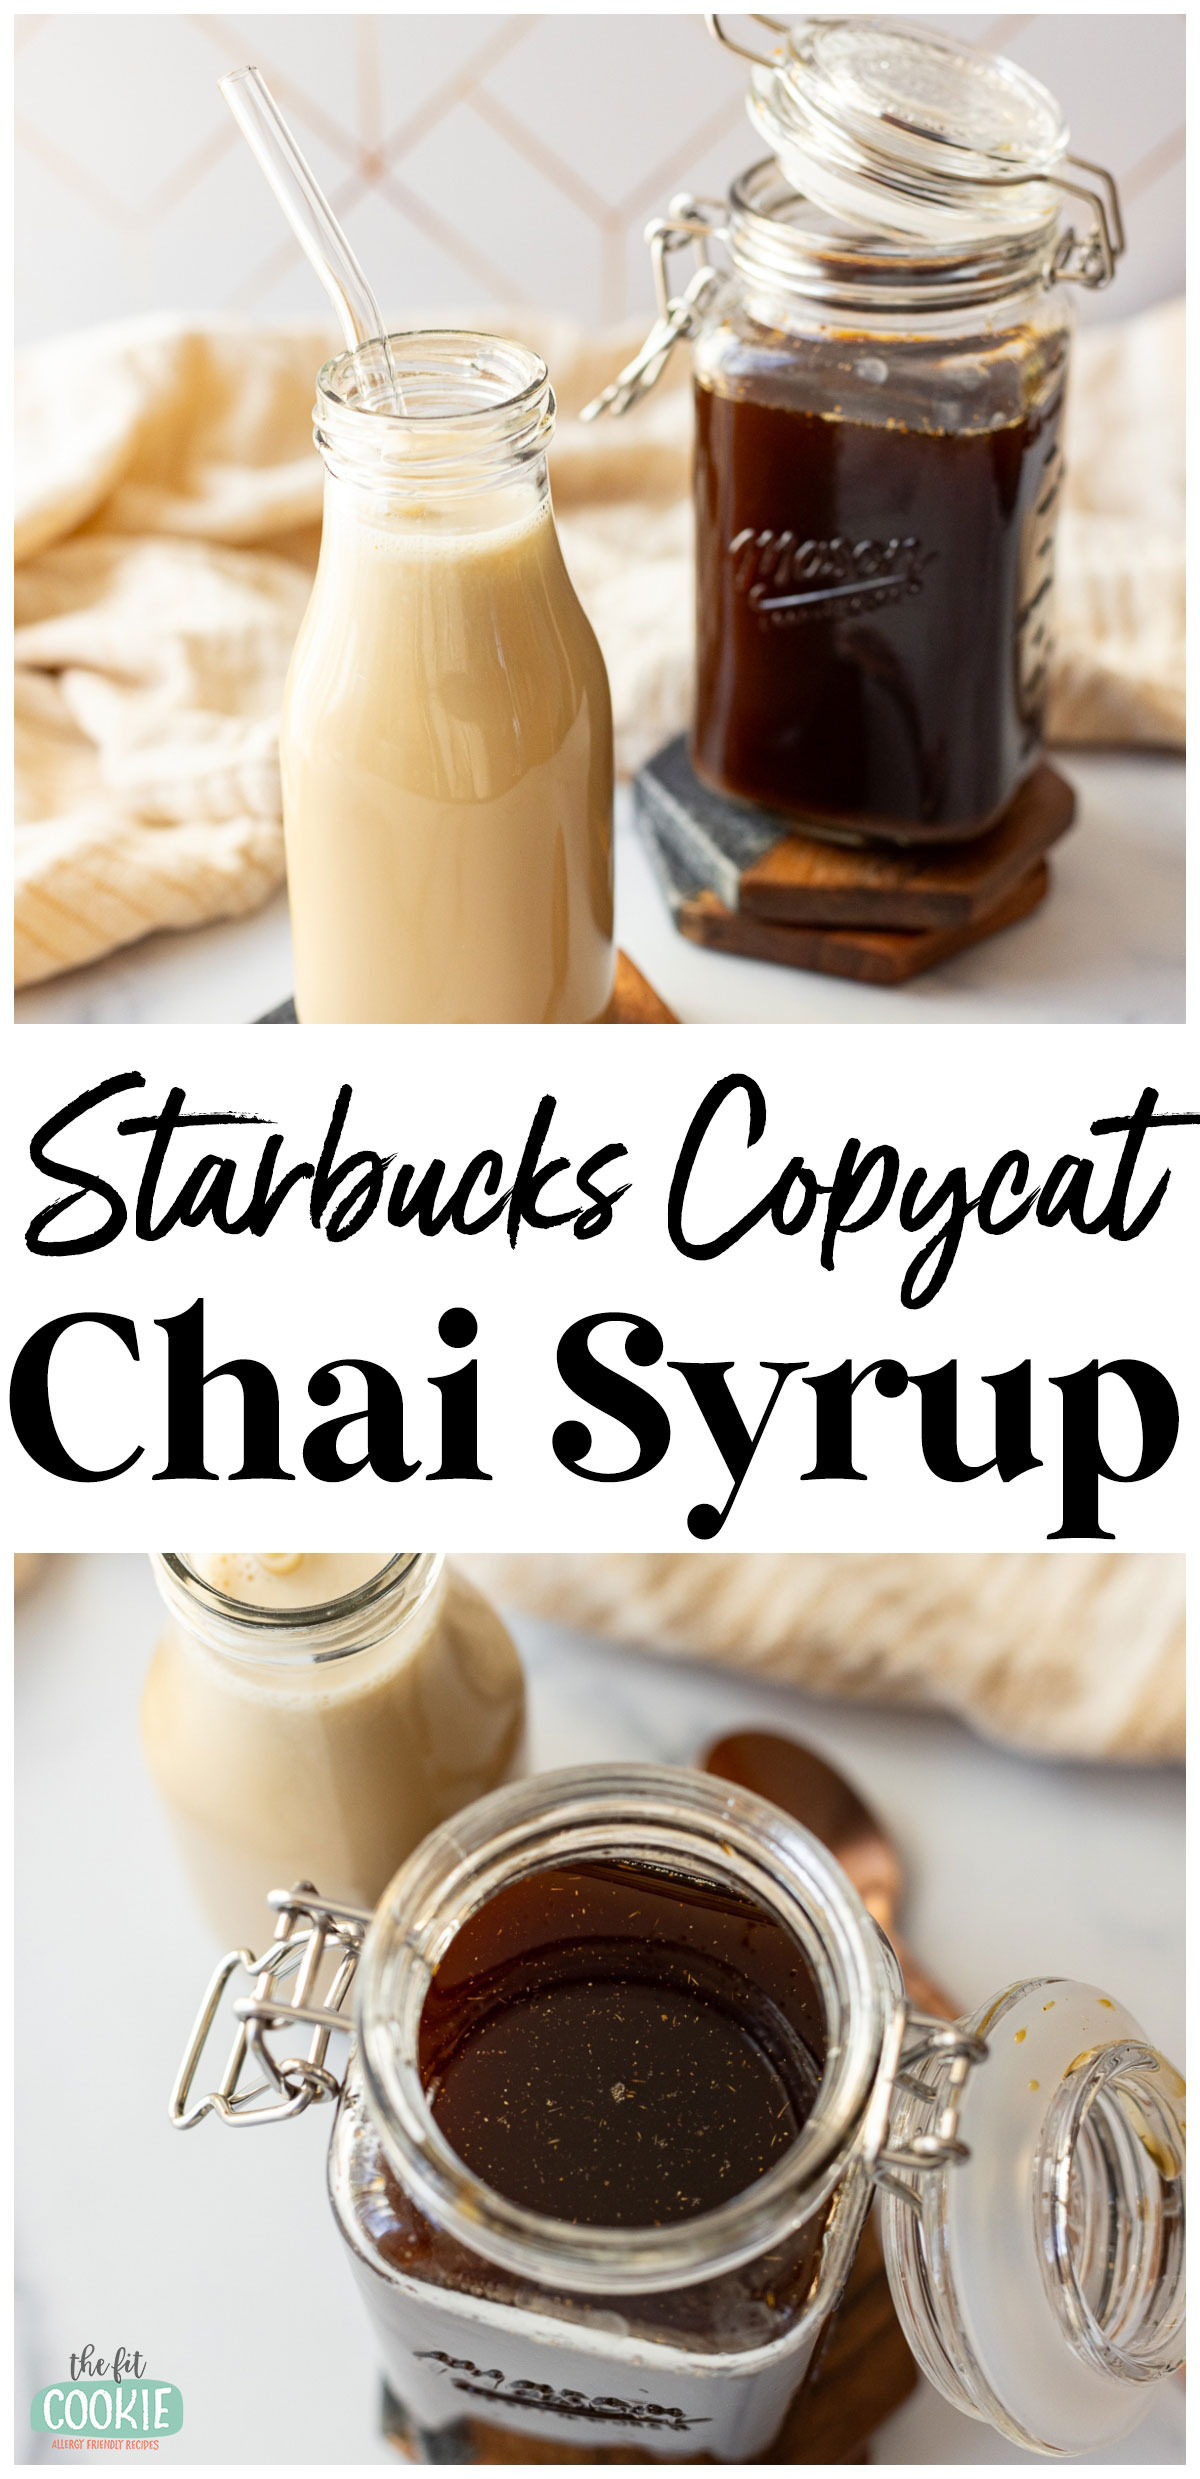 Starbucks copycat chai syrup recipe.